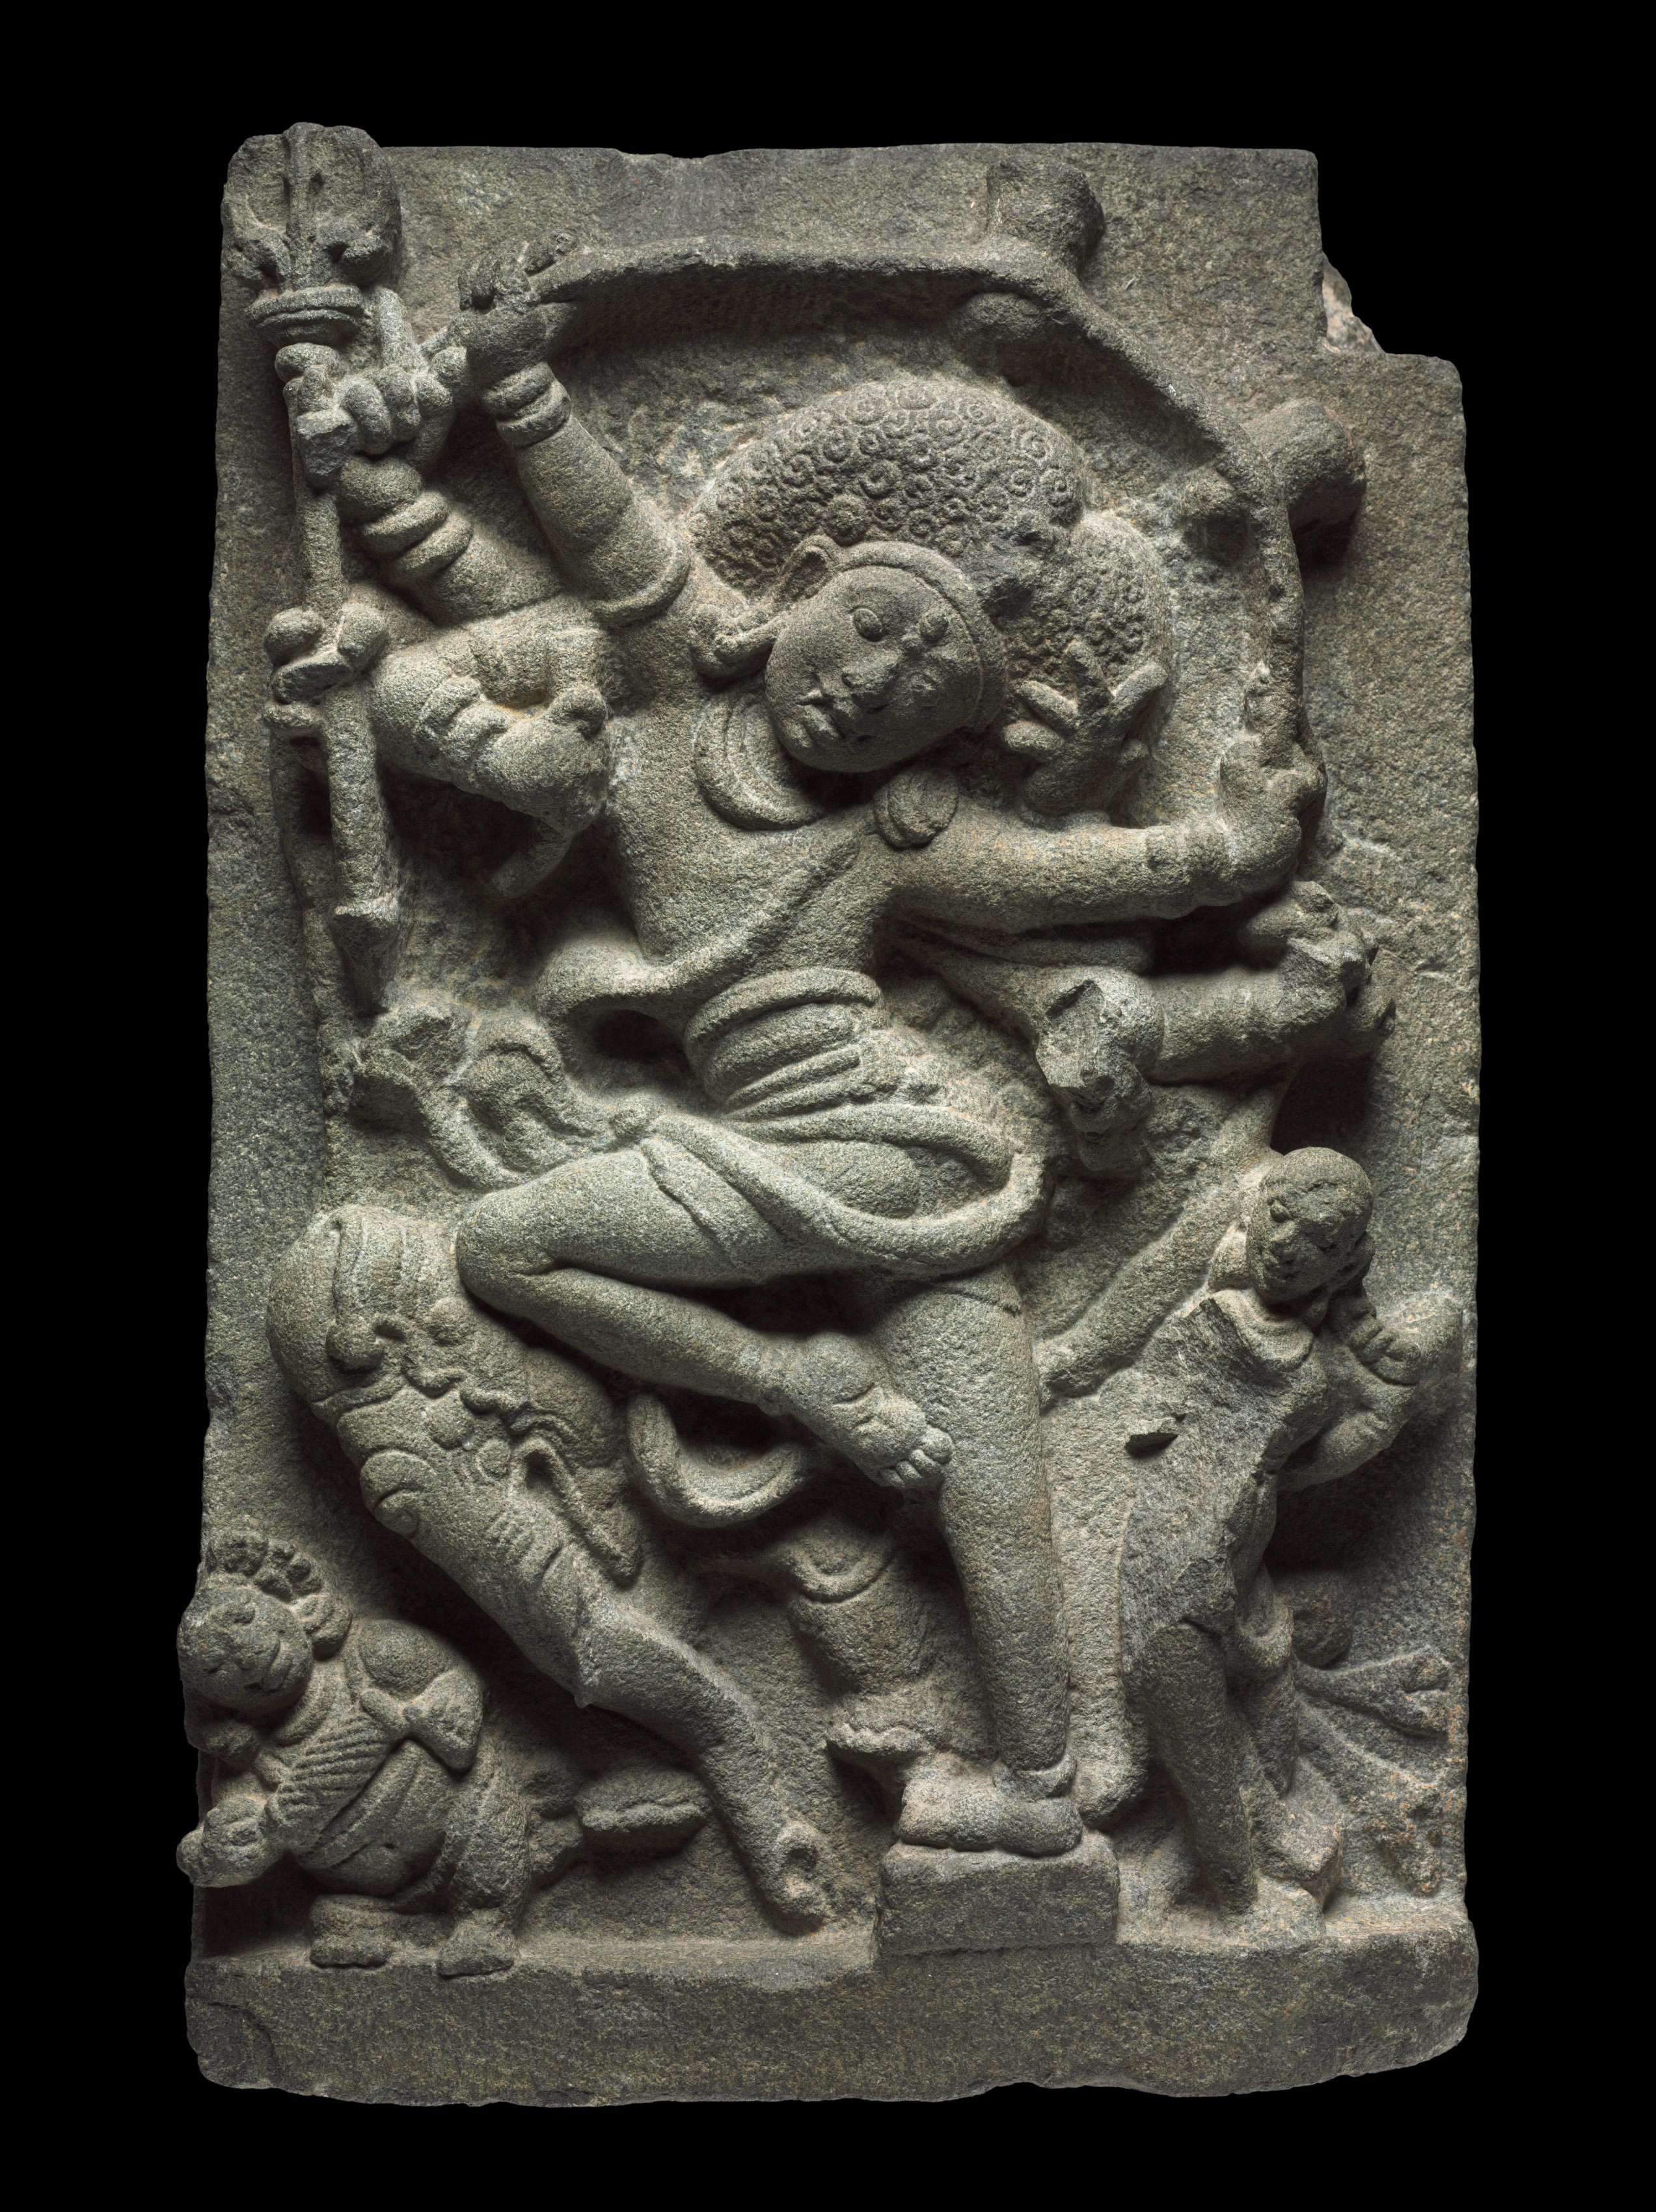 Shiva as Slayer of the Elephant Demon